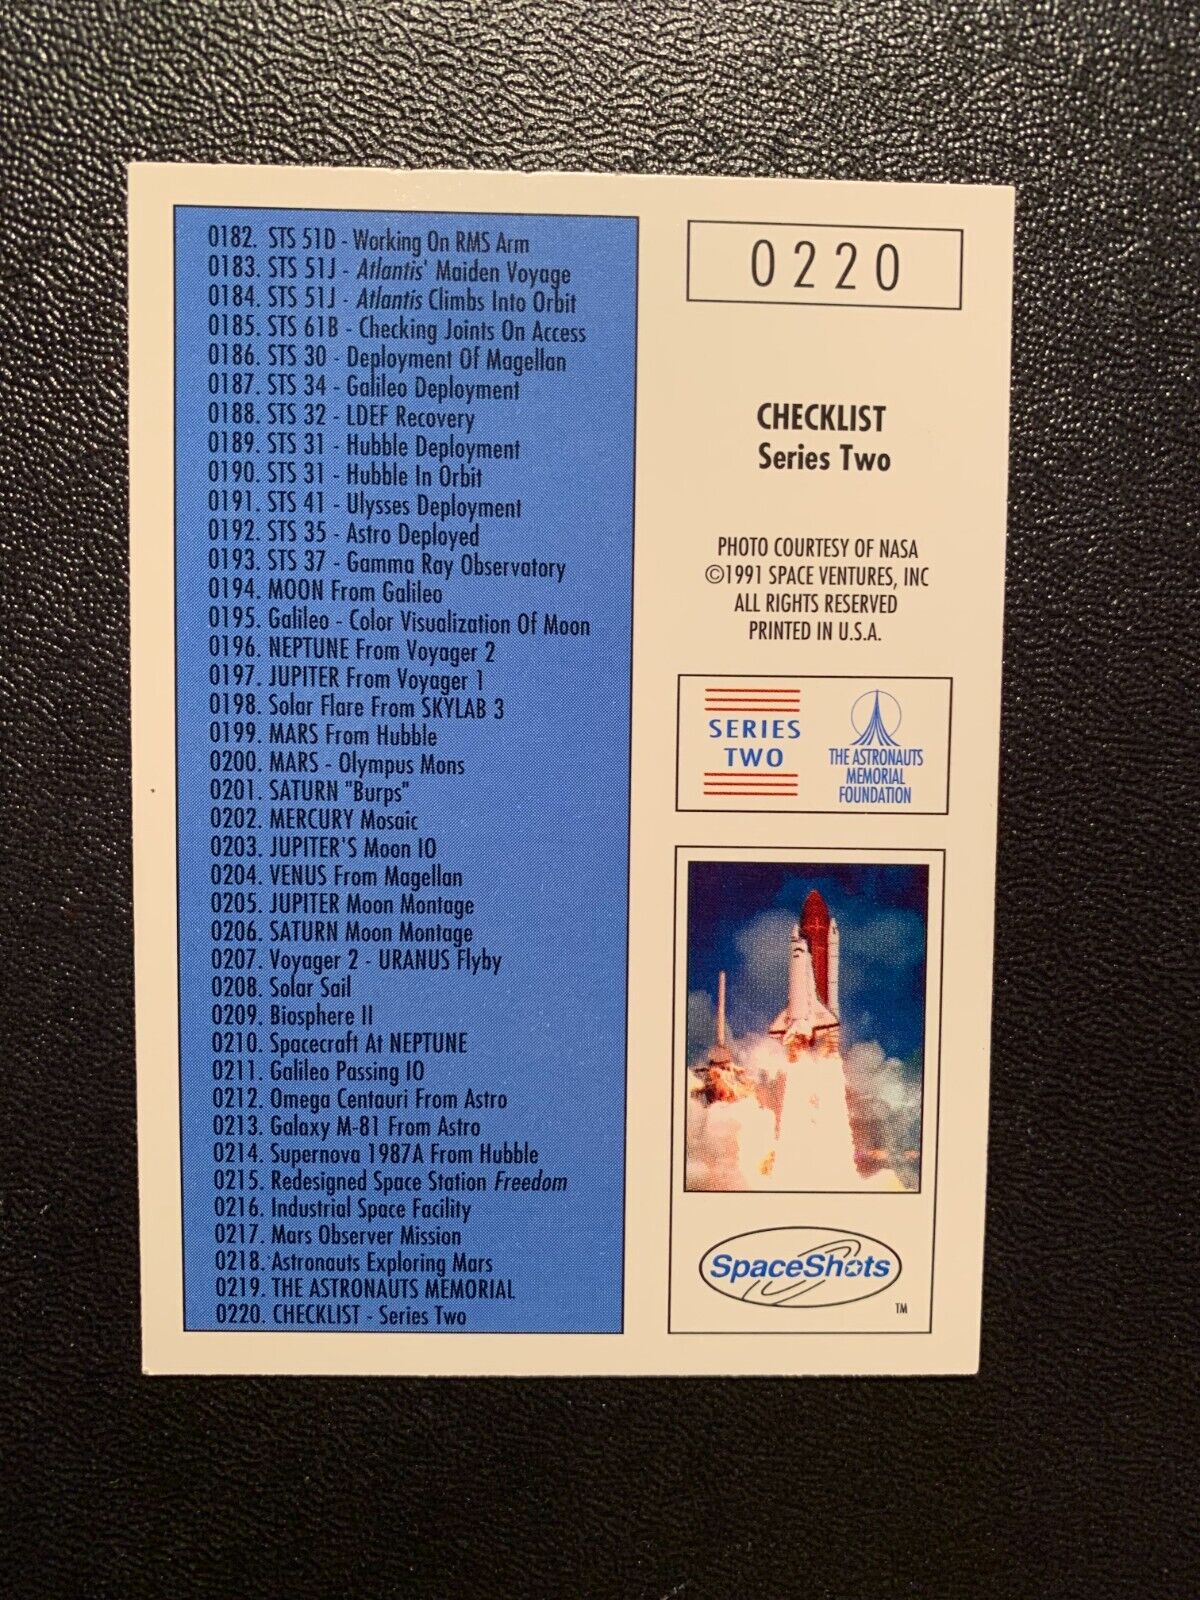 SPACESHOTS  CHECKLIST  Card 1991 Space Ventures SERIES TWO